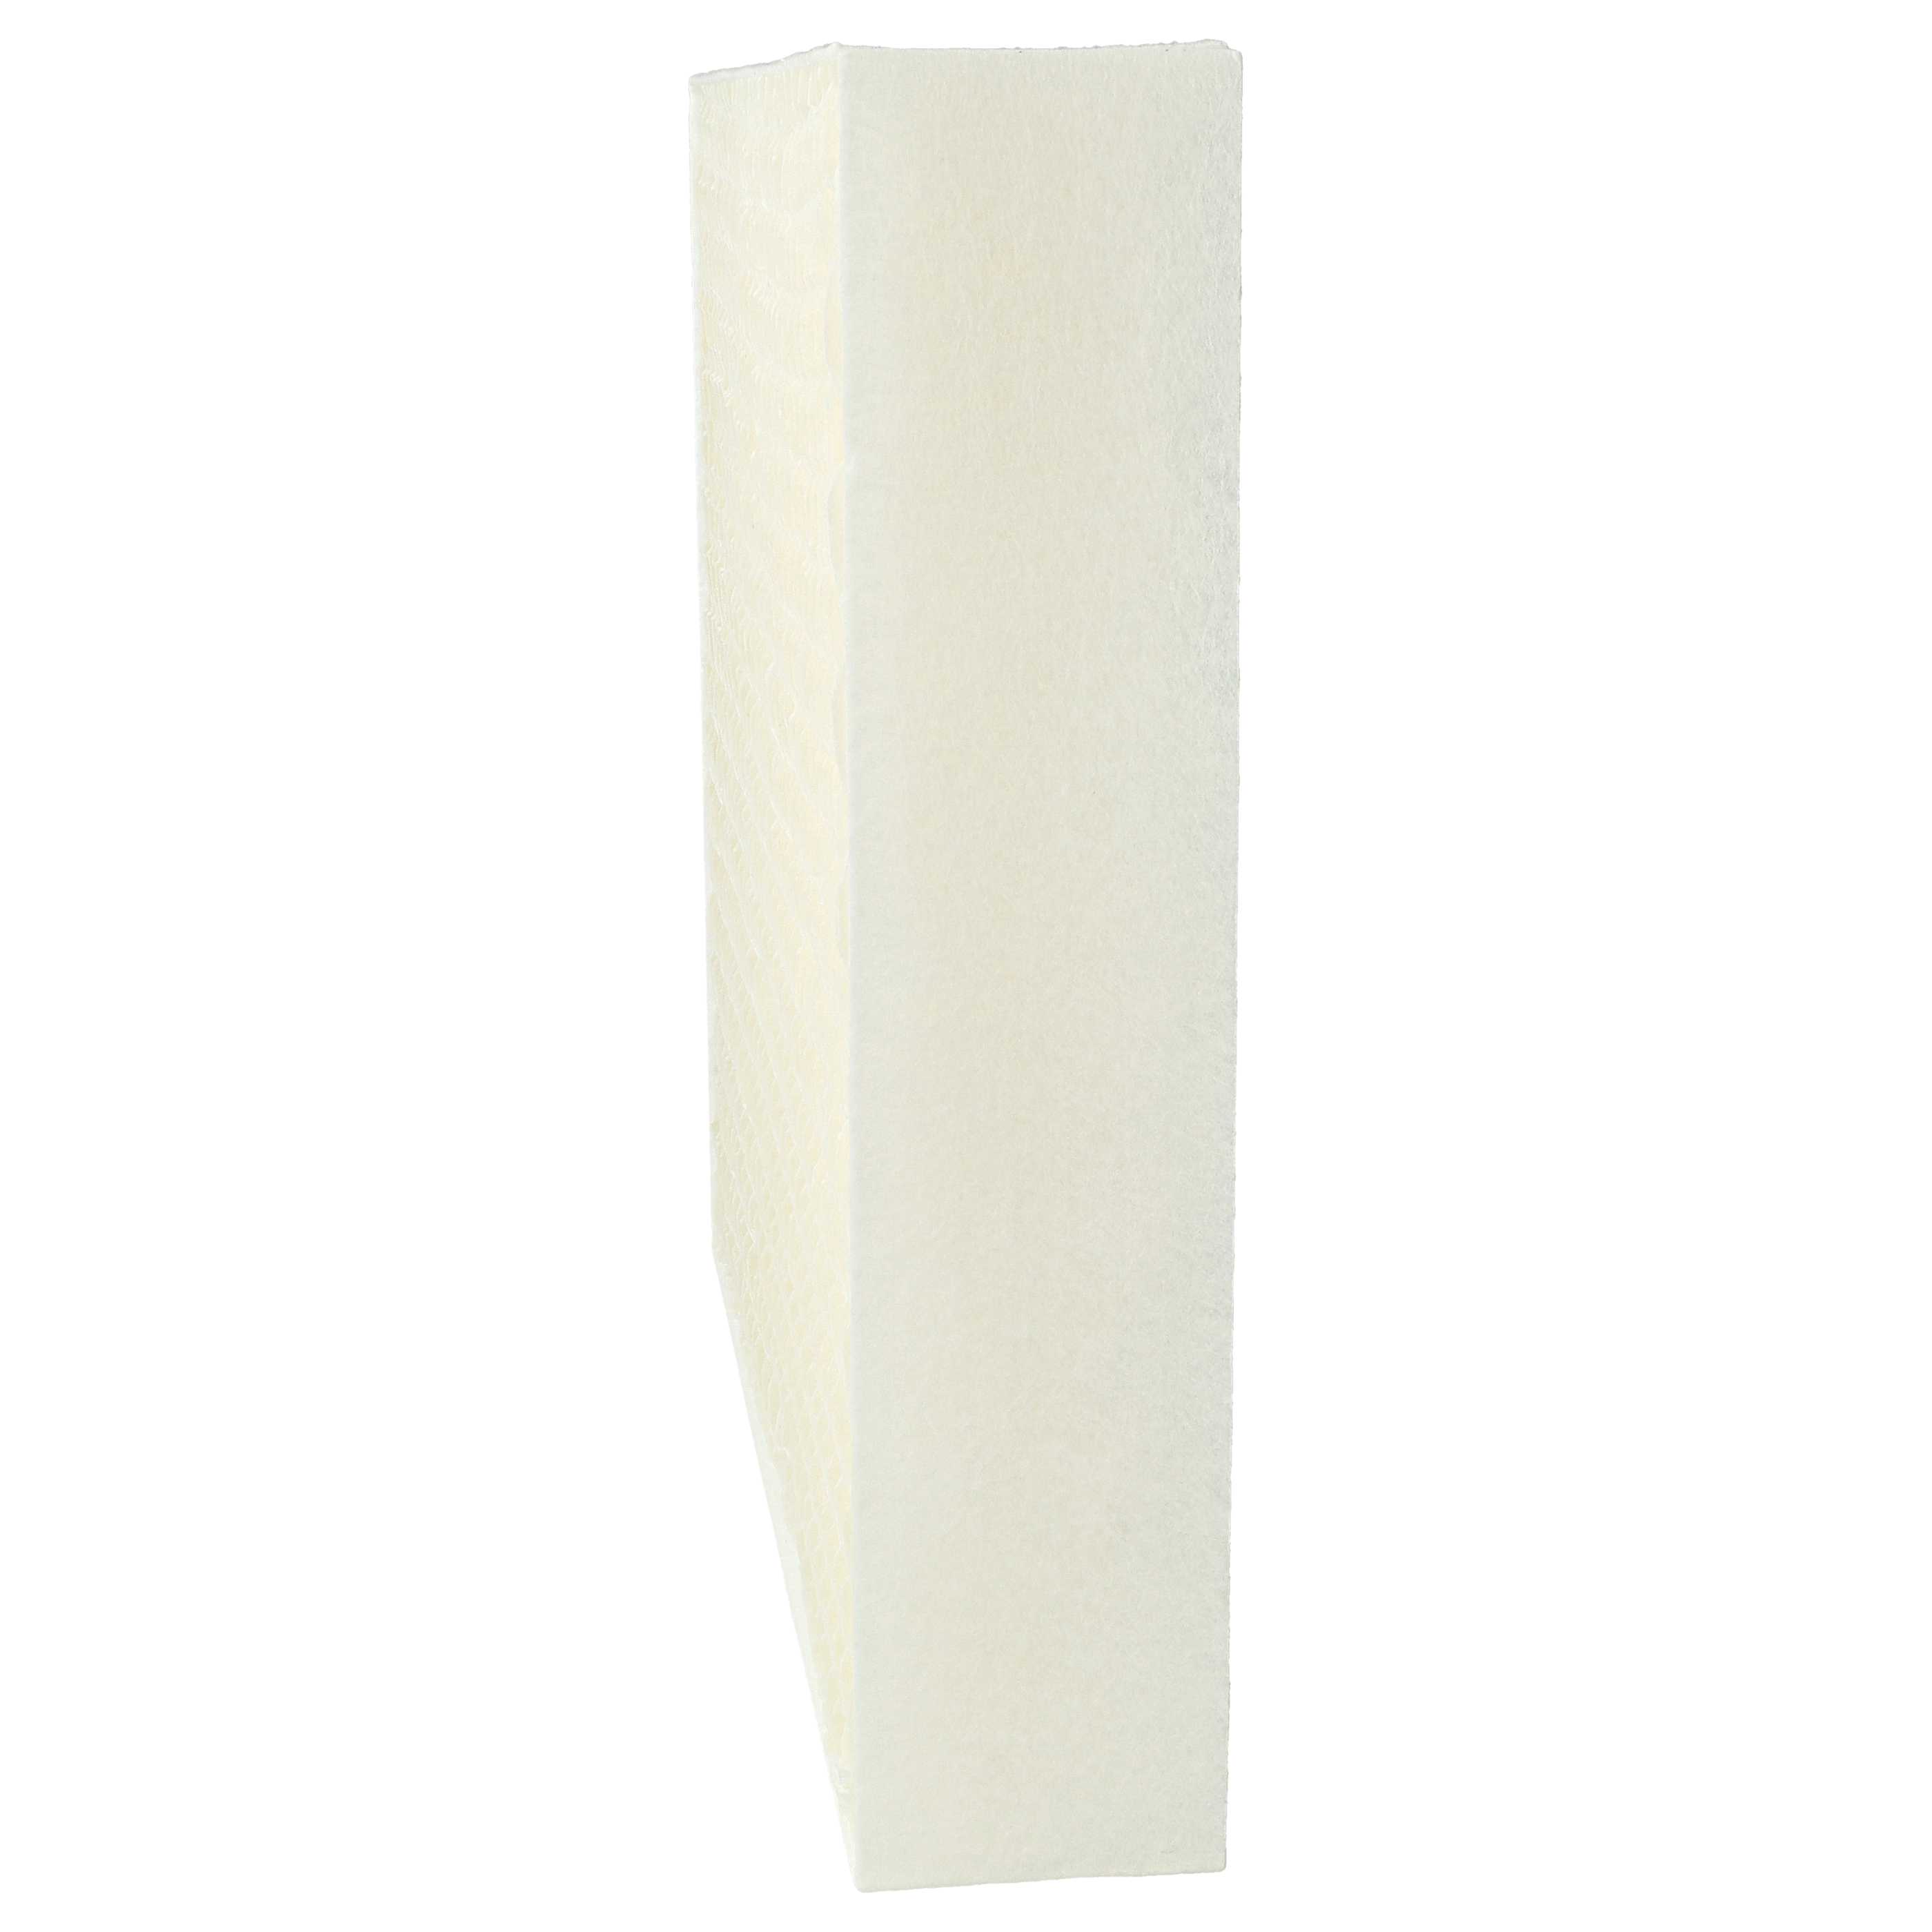 4x Filtro reemplaza Stadler Form 10004, 14643/10 para humidificador - papel